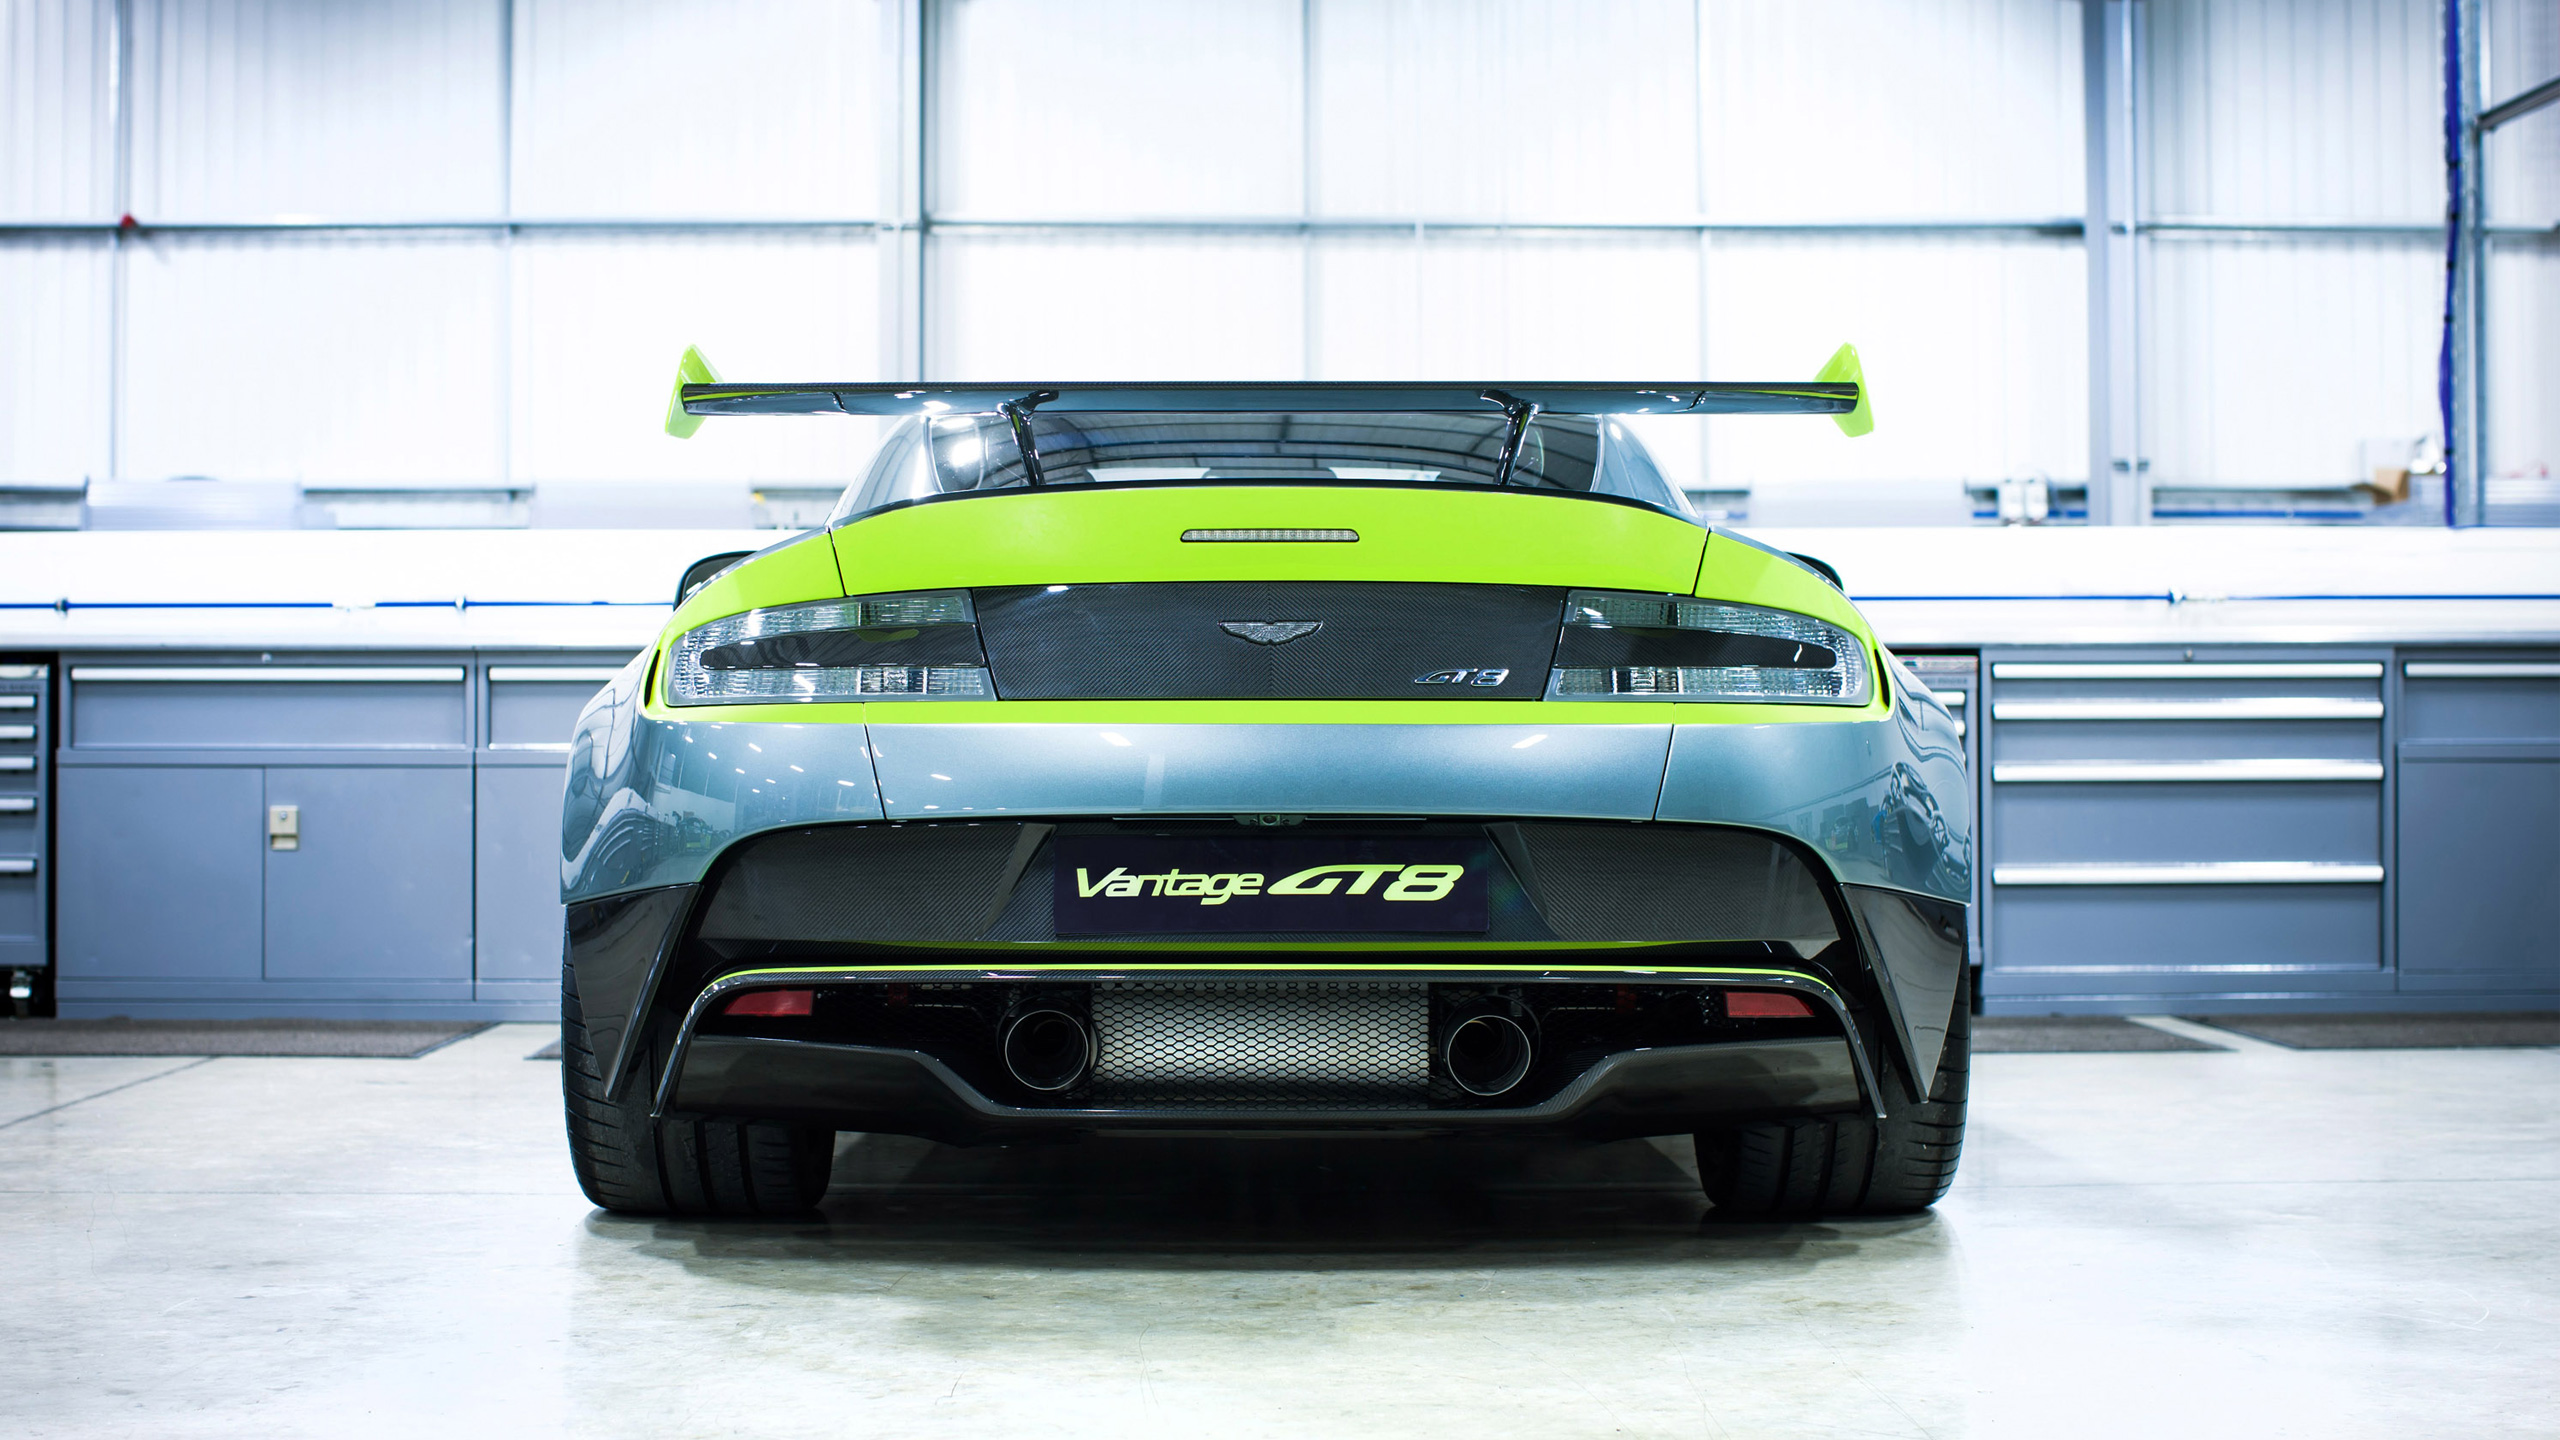 Aston Martin Vantage Gt8 Wallpapers